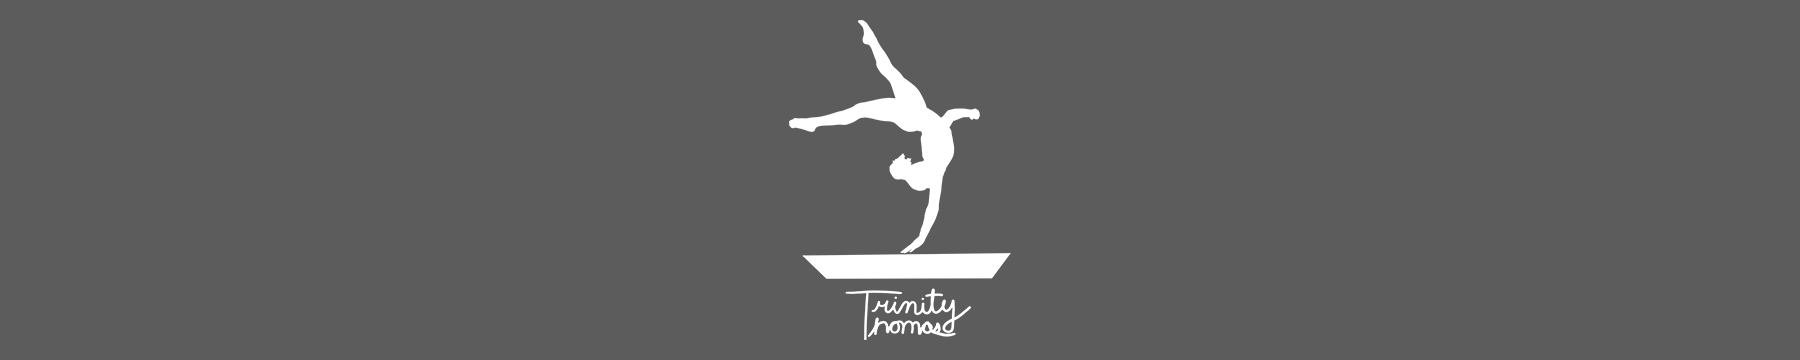 Trinity Thomas